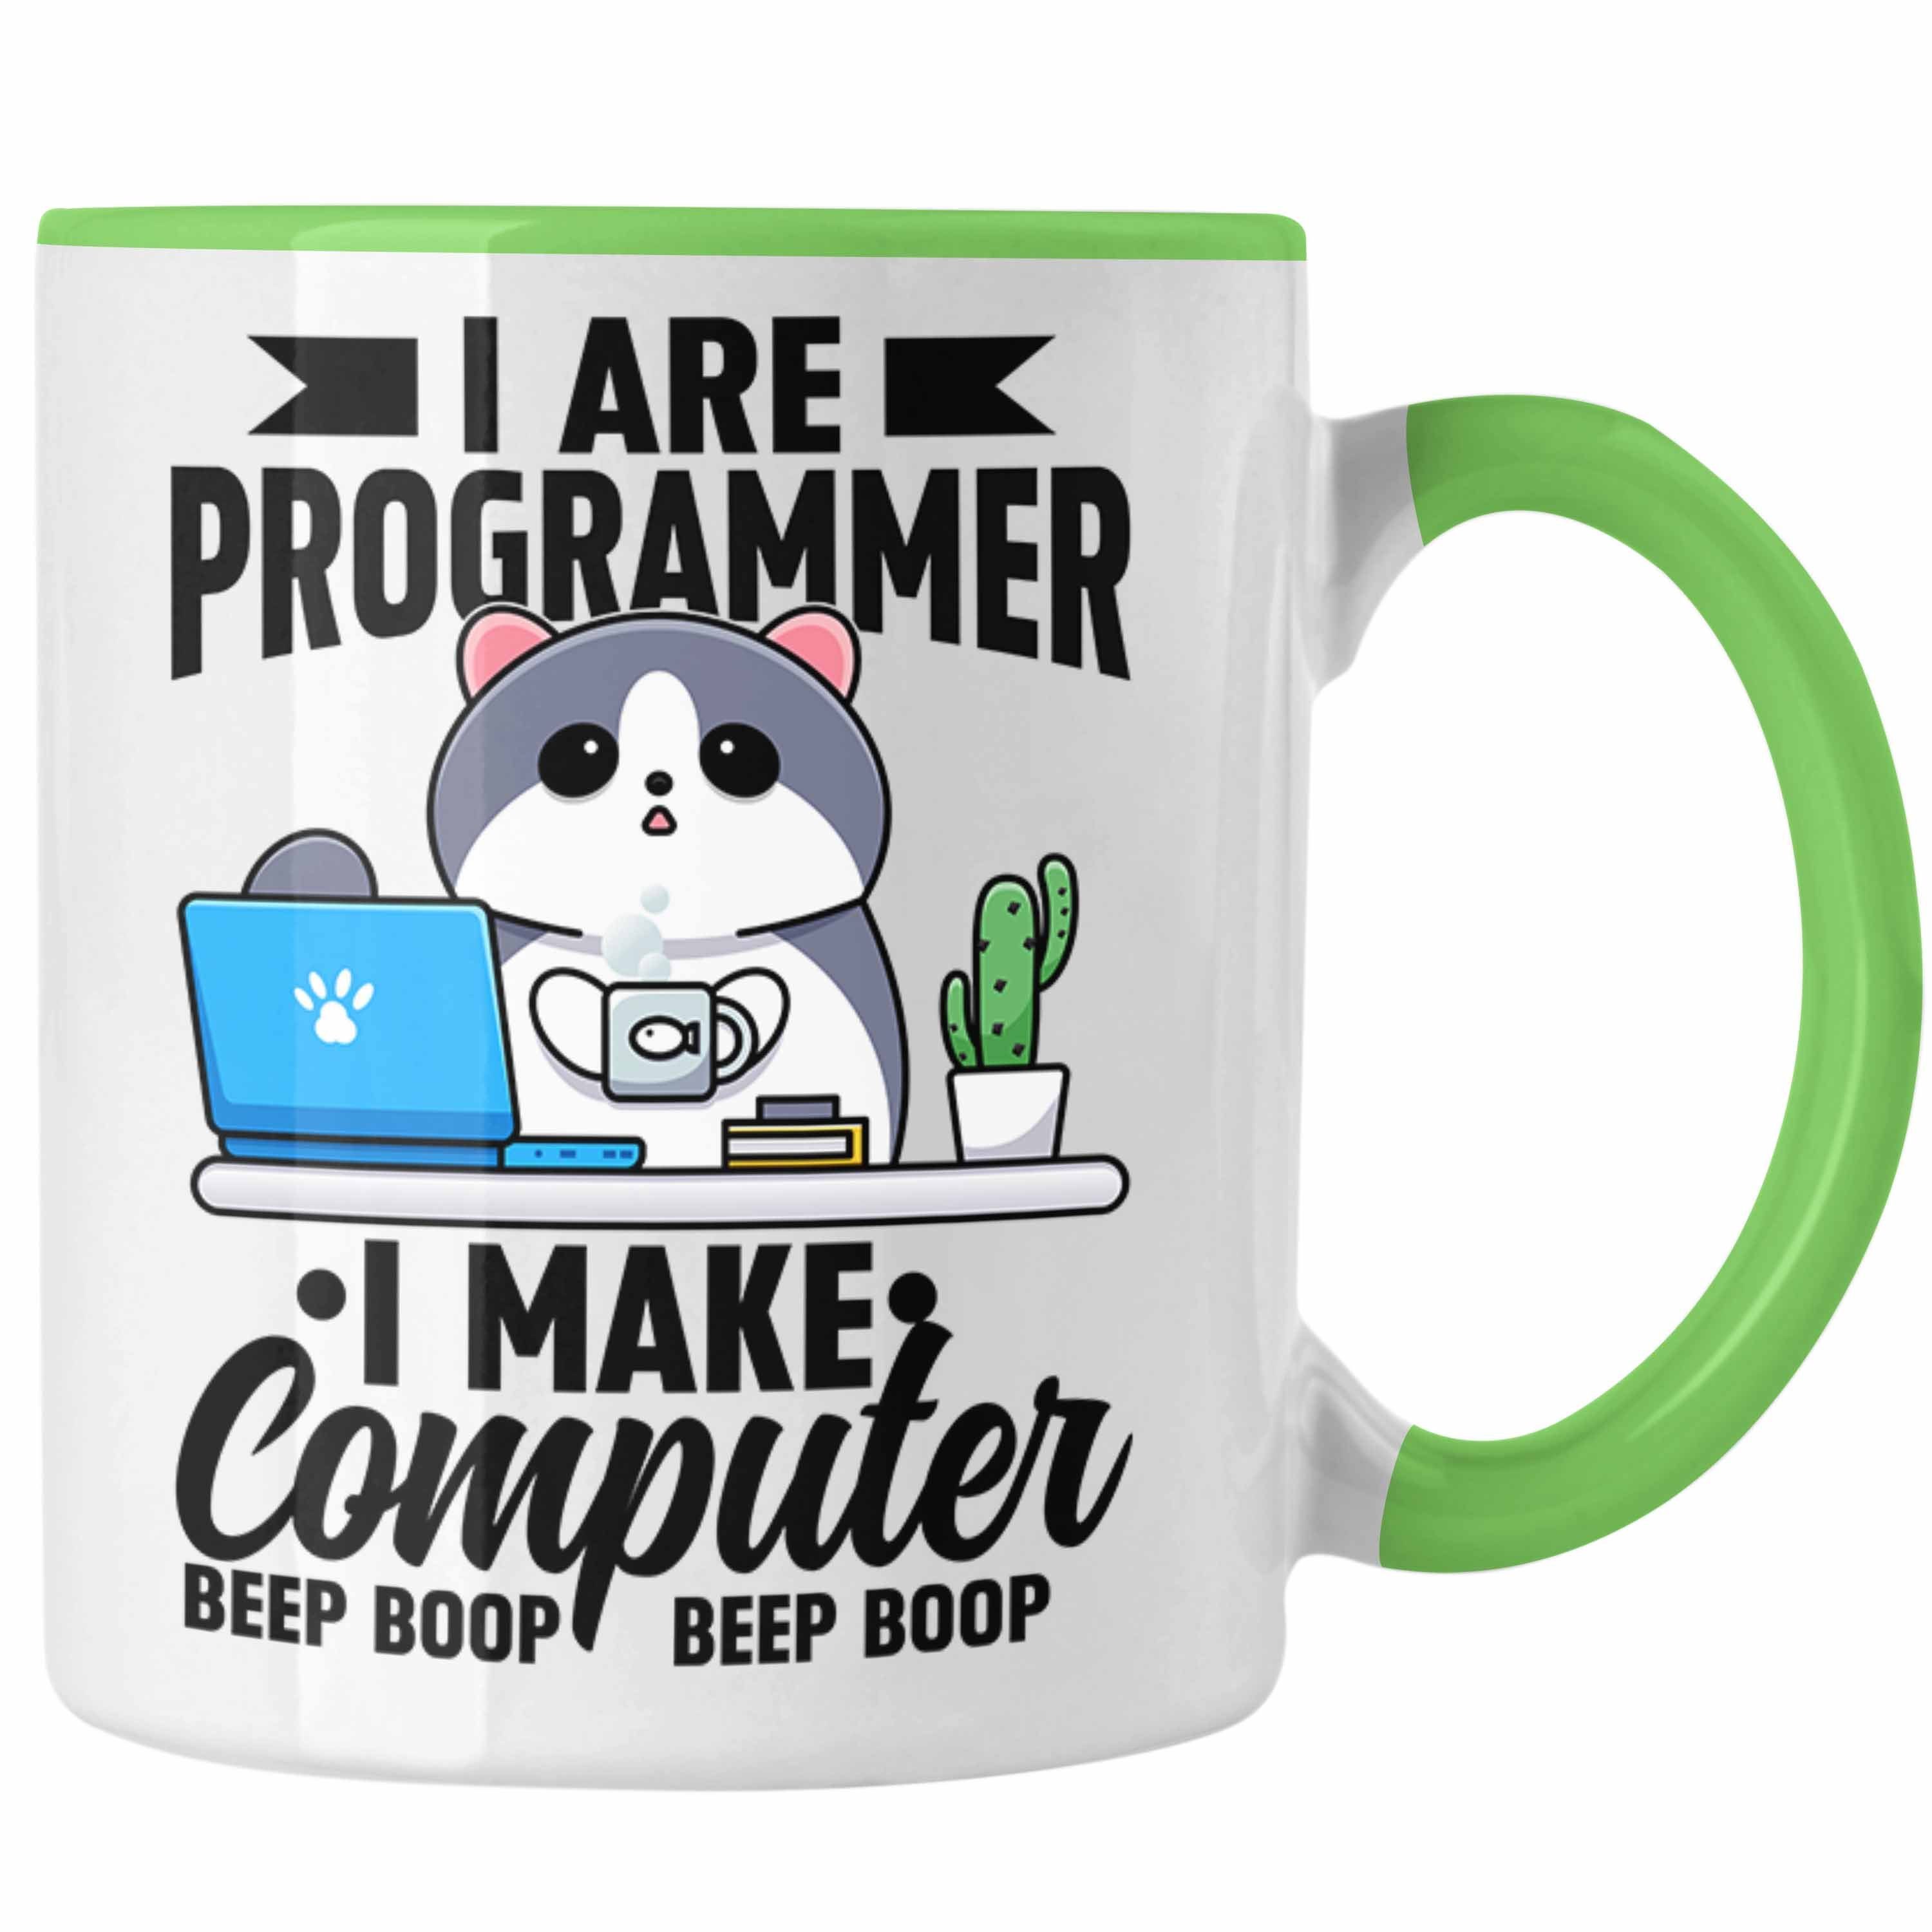 Trendation Tasse Trendation - Lustige Programmierer Tasse Geschenk Humor I Are Programmer I Make Computer Beep Boop Lustiger Spruch Grün